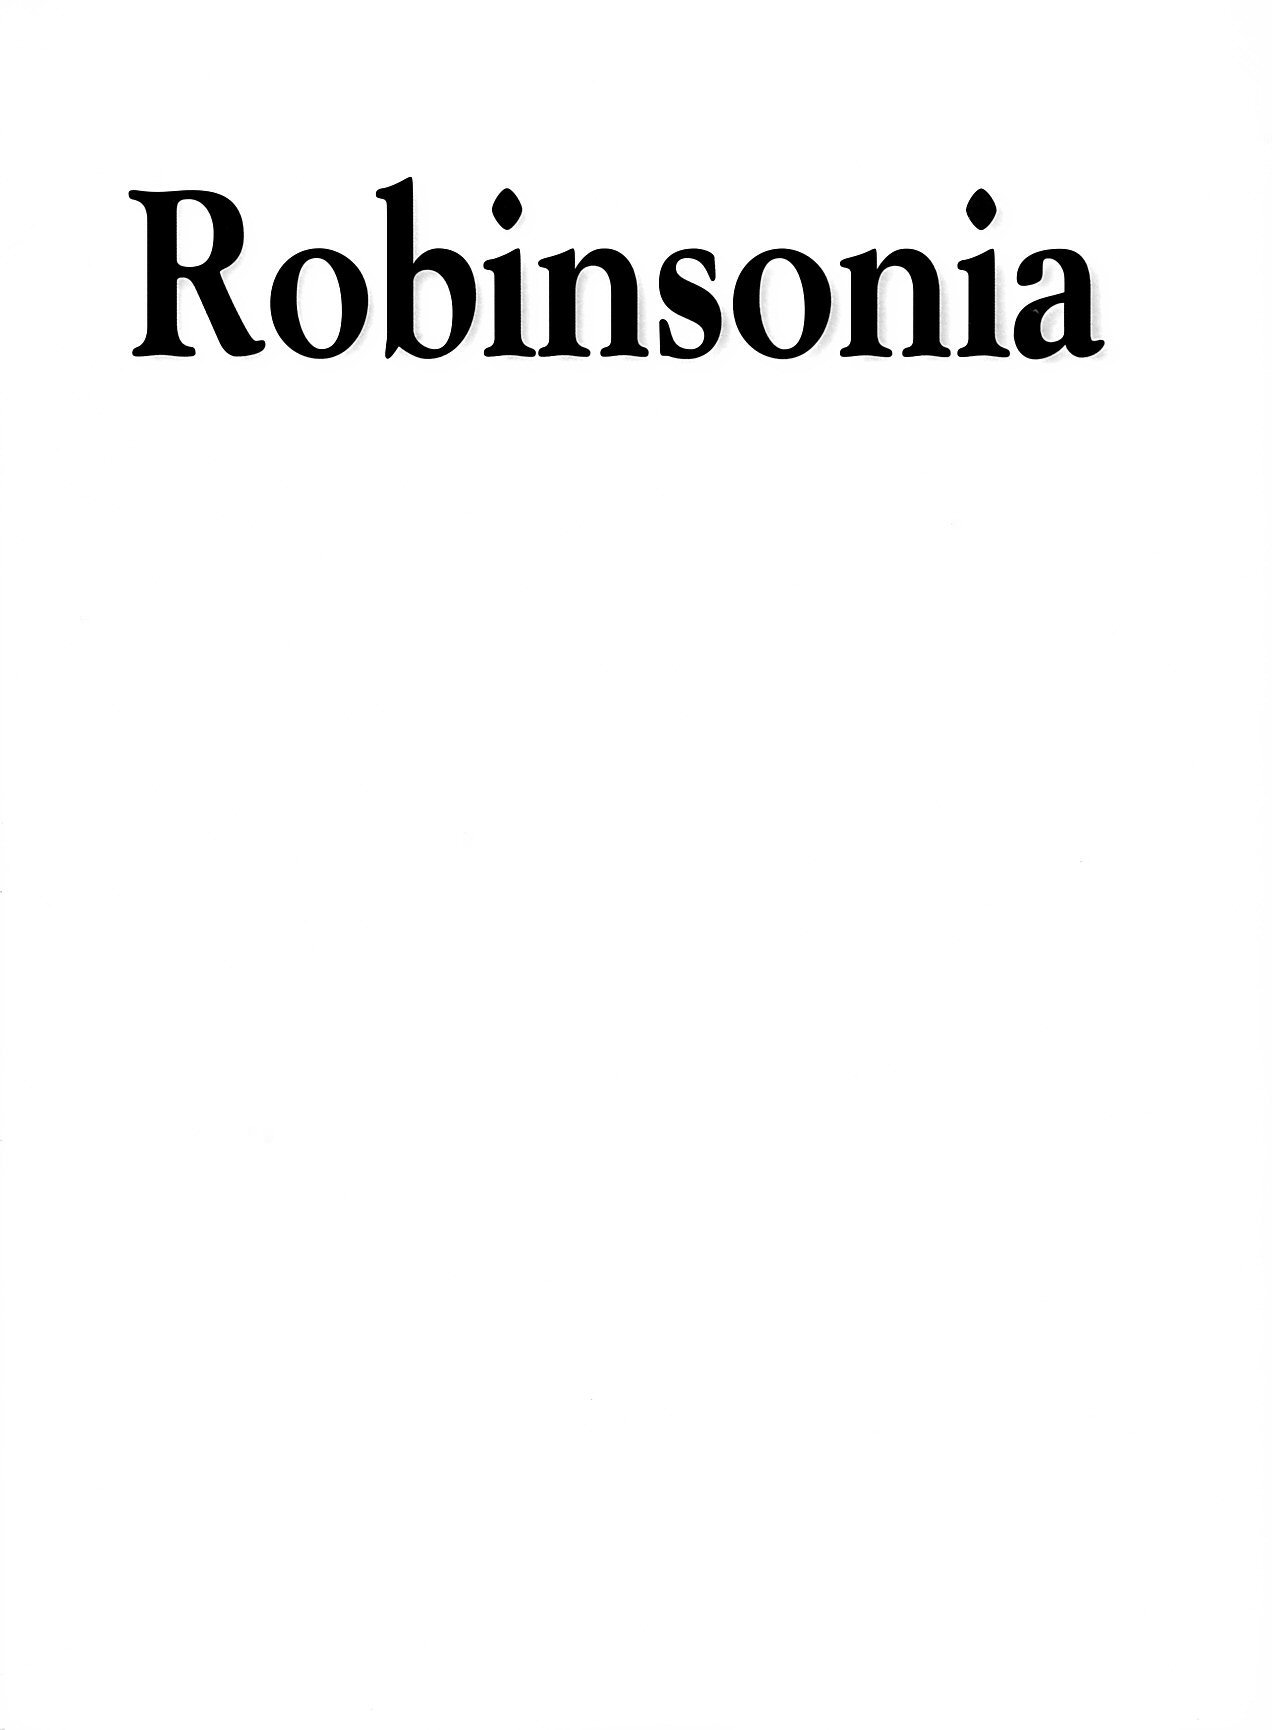 Read online Robinsonia comic -  Issue # Full - 3